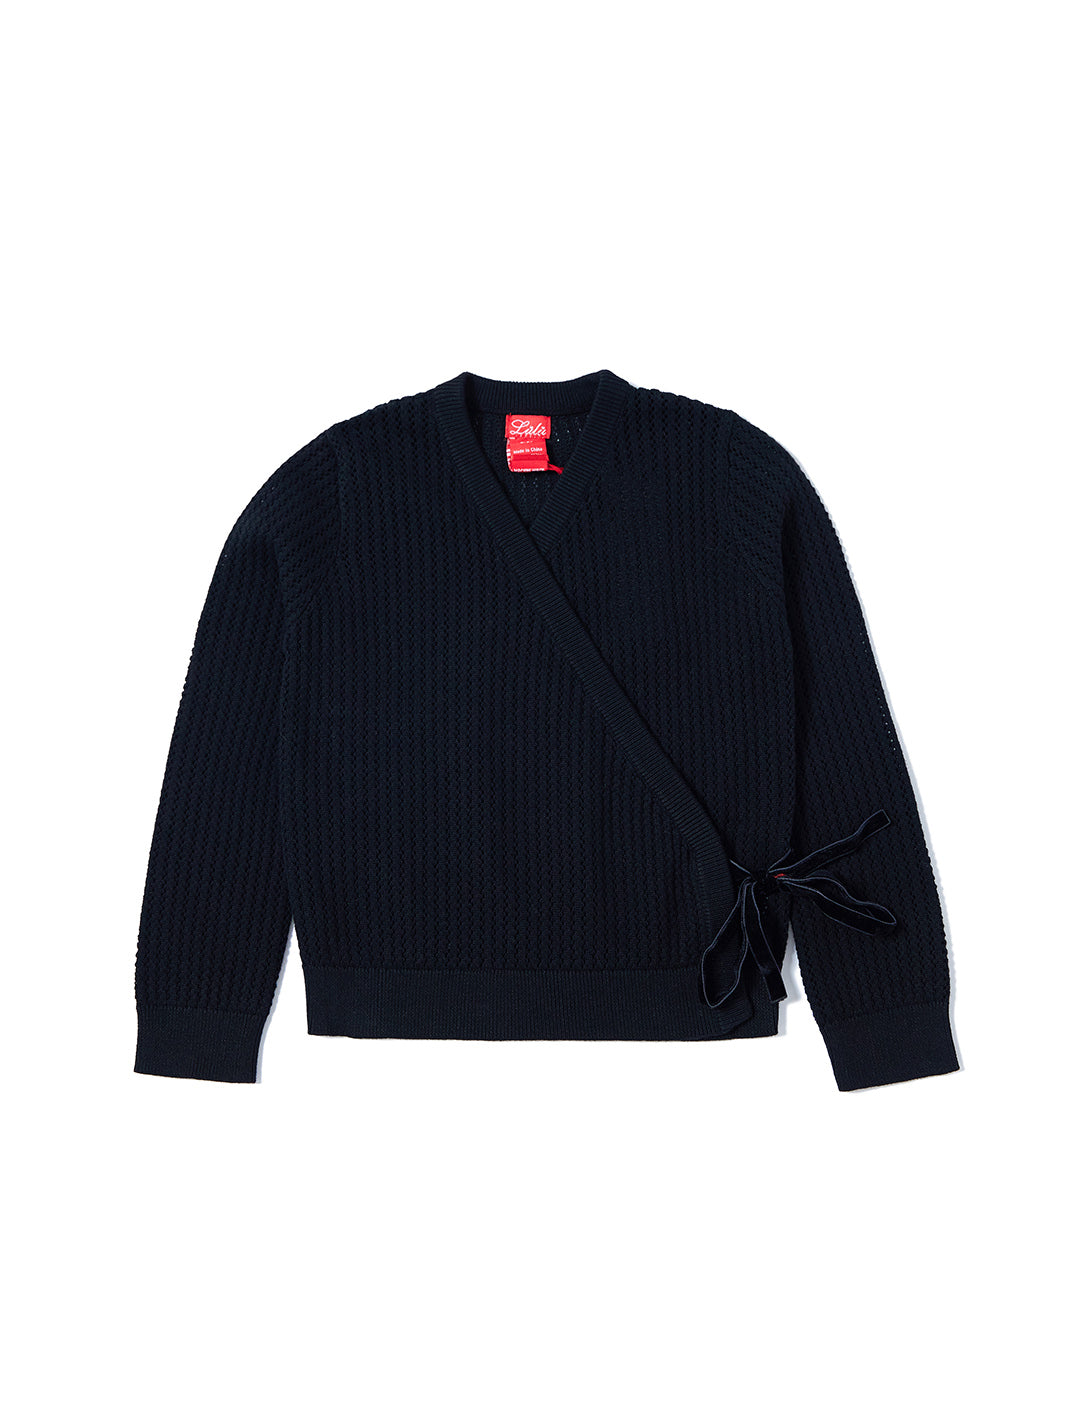 Wrap Style Sweater - Black